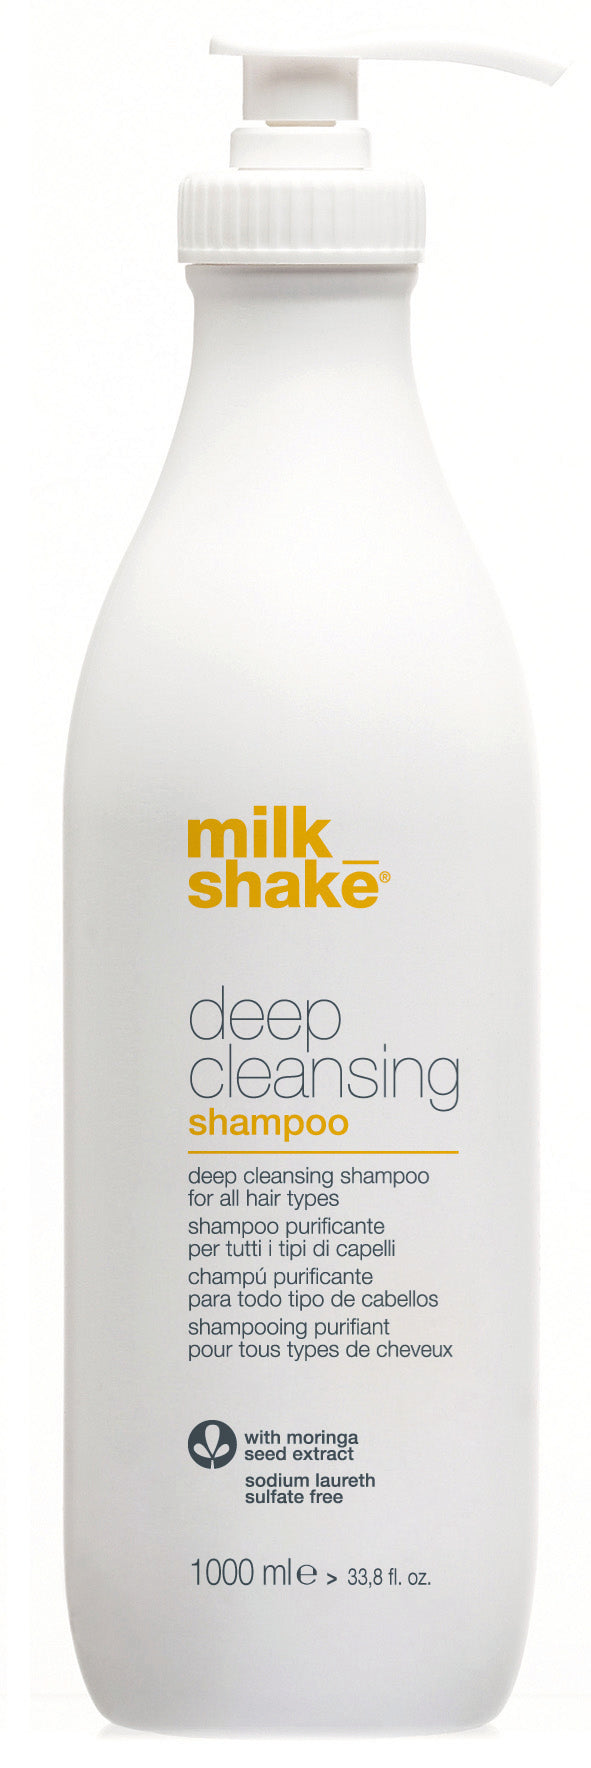 milk_shake deep cleansing shampoo 1L